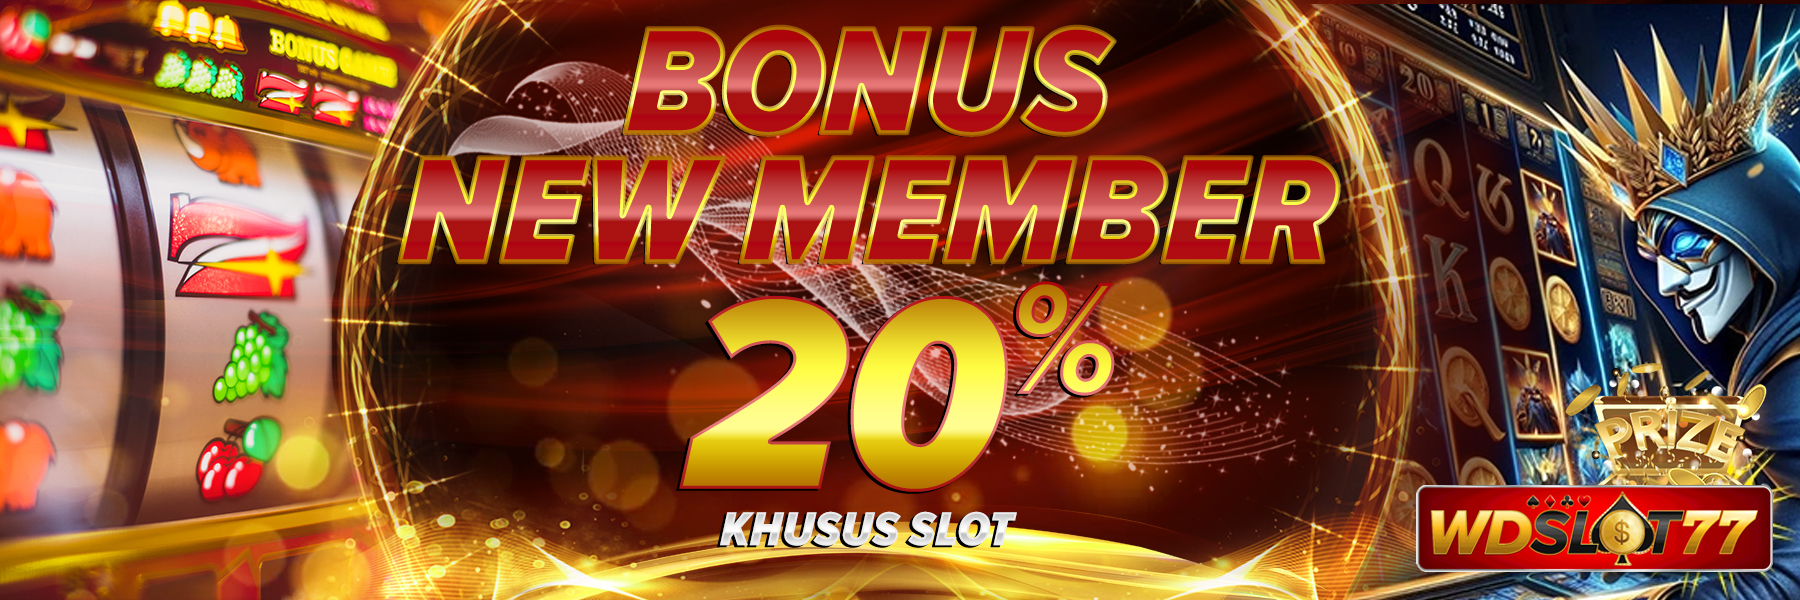 Bonus New Member 20 %